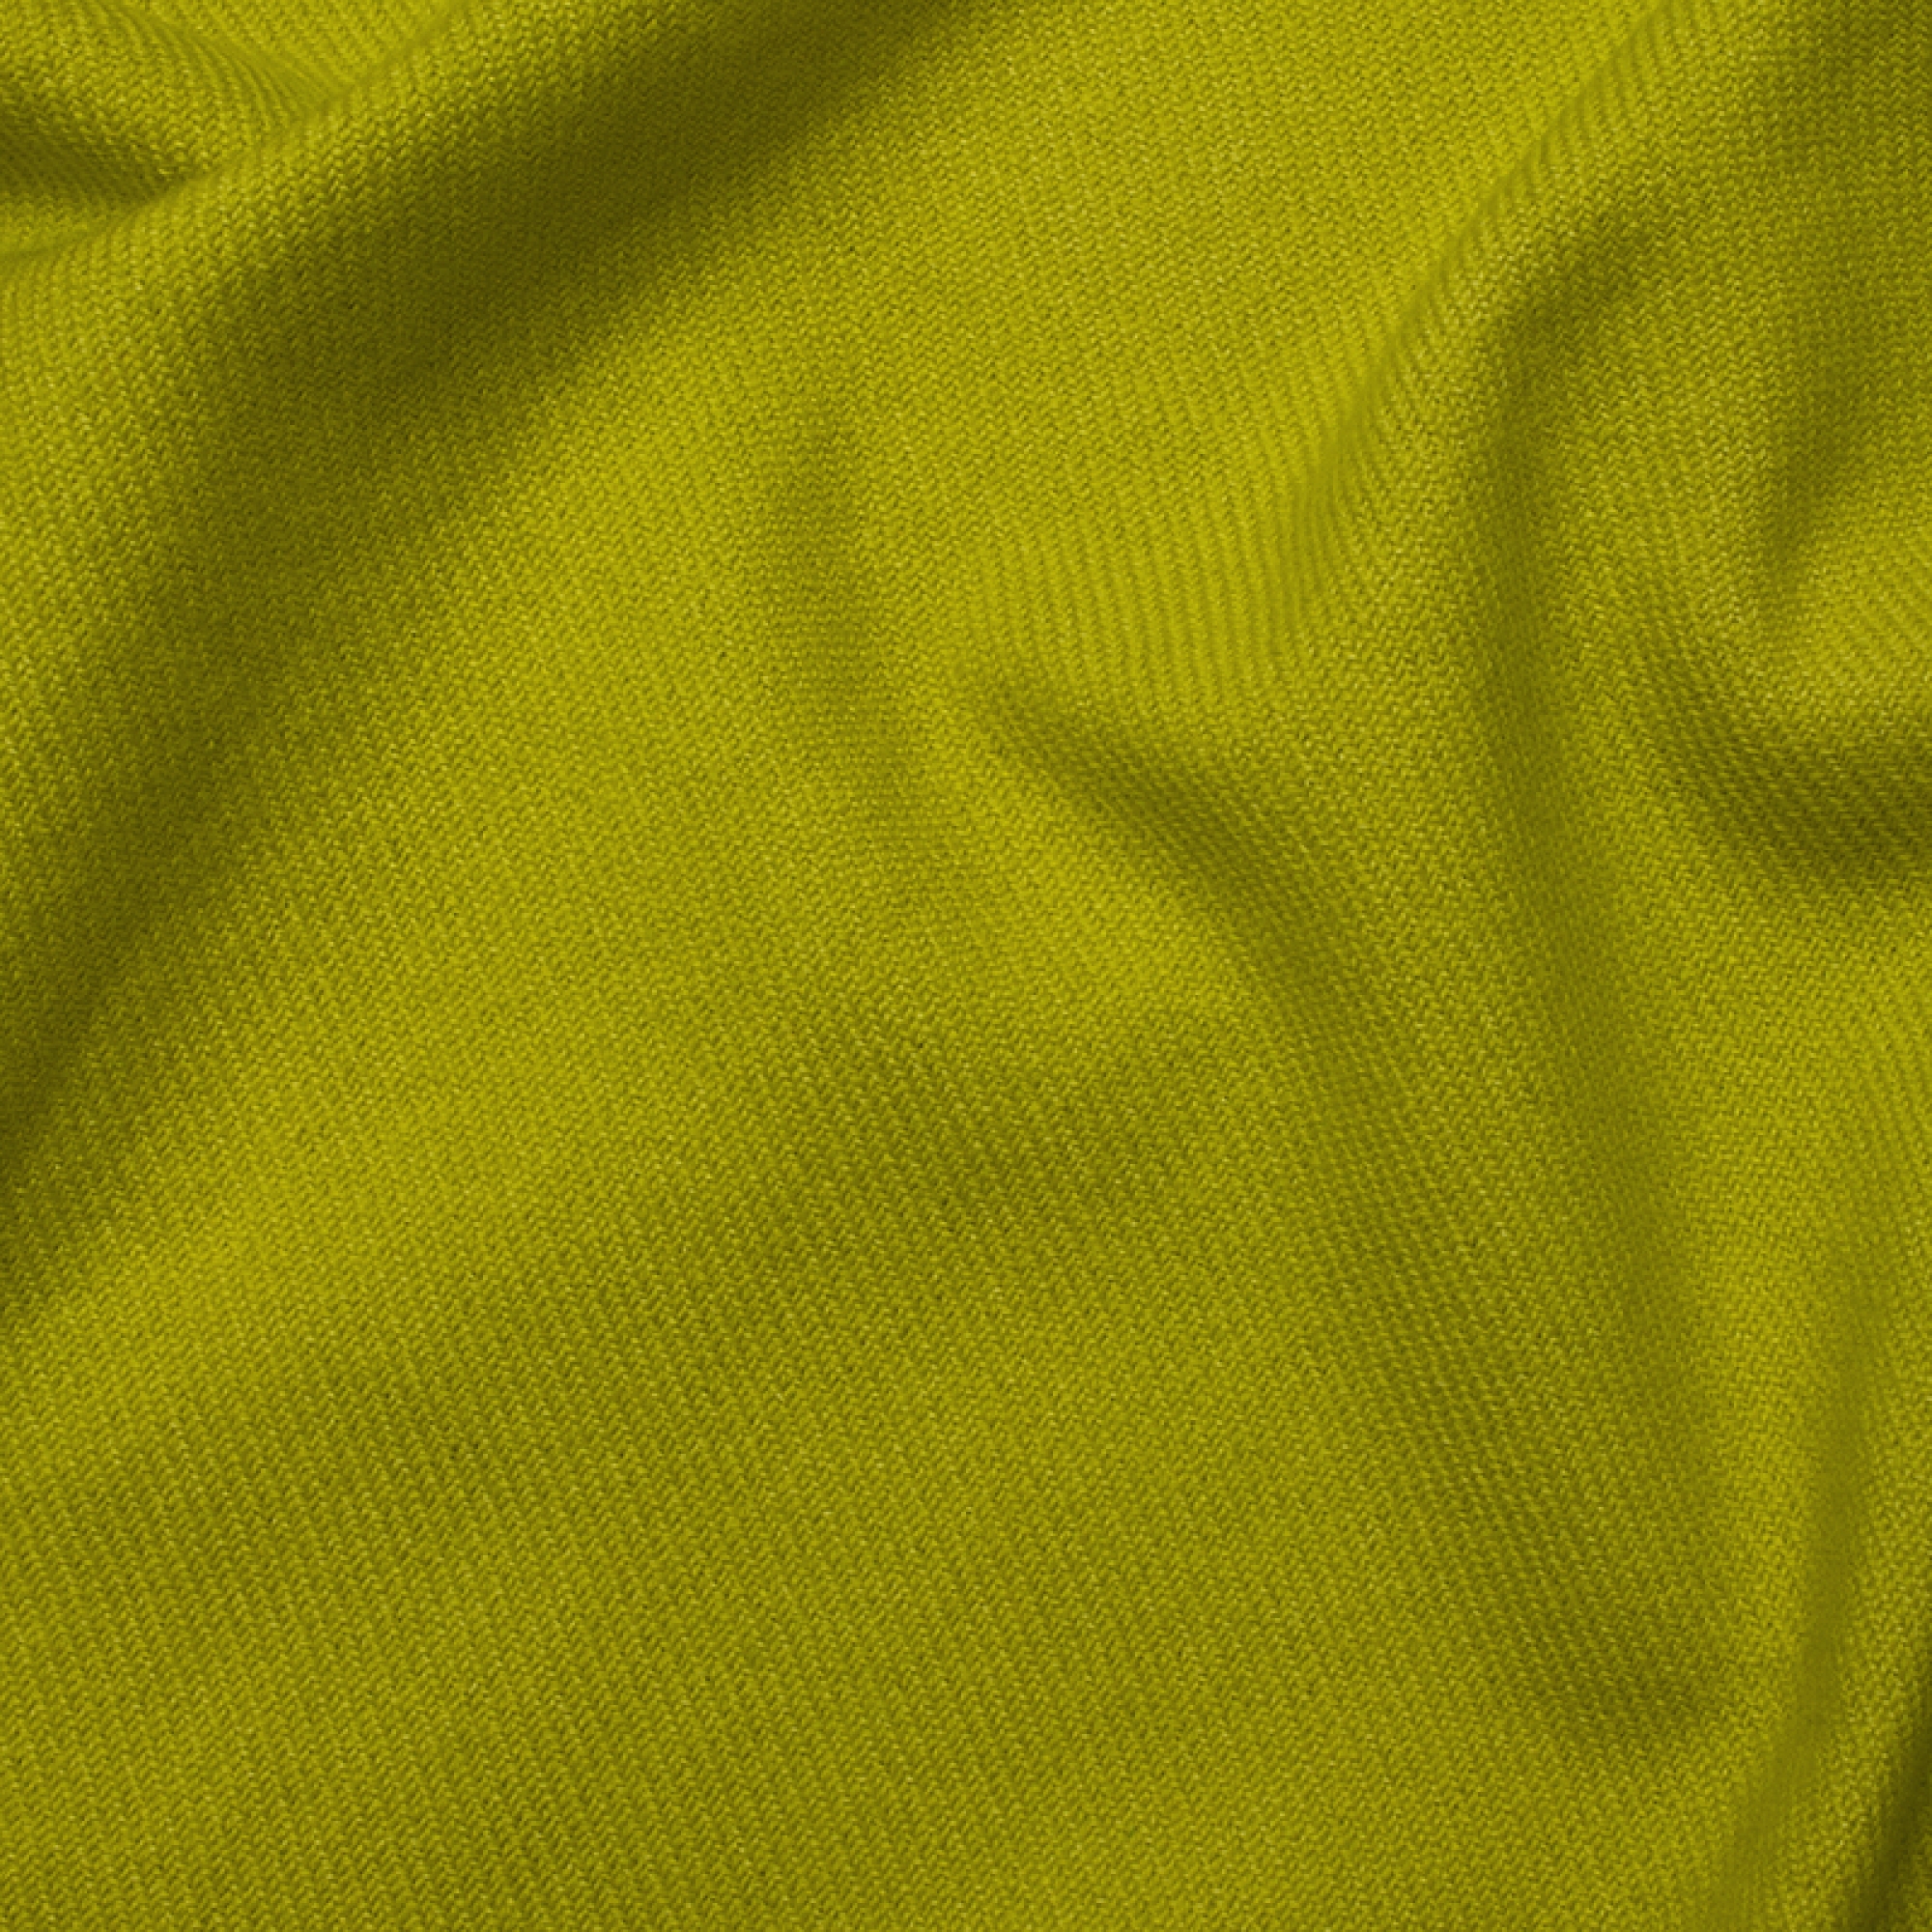 Cashmere accessories blanket toodoo plain m 180 x 220 chartreuse 180 x 220 cm